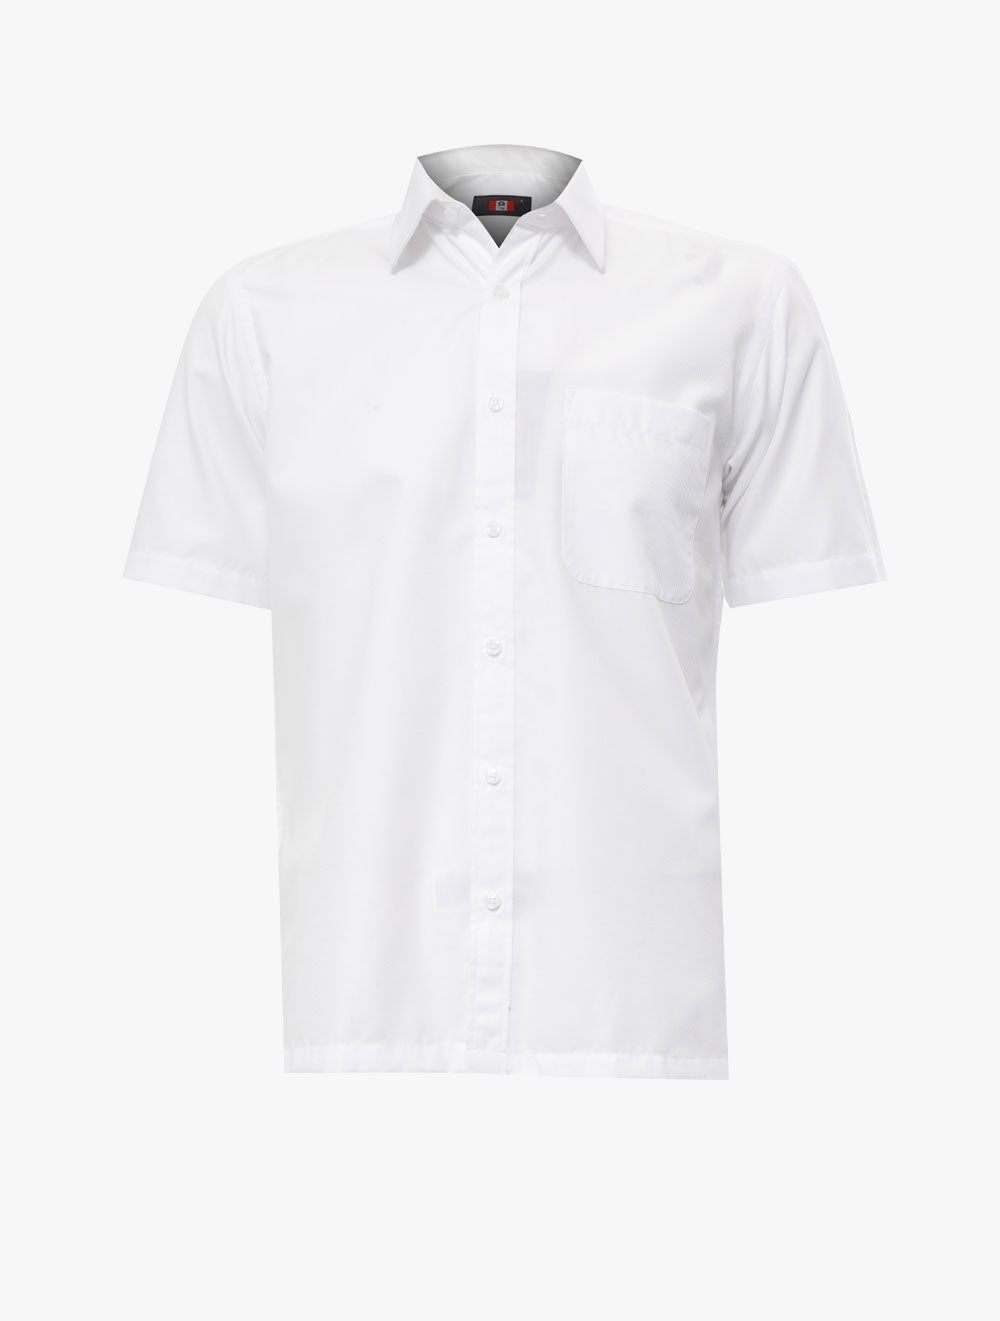 GQ
Casual Short Sleeve Shirt 1622257XXL01